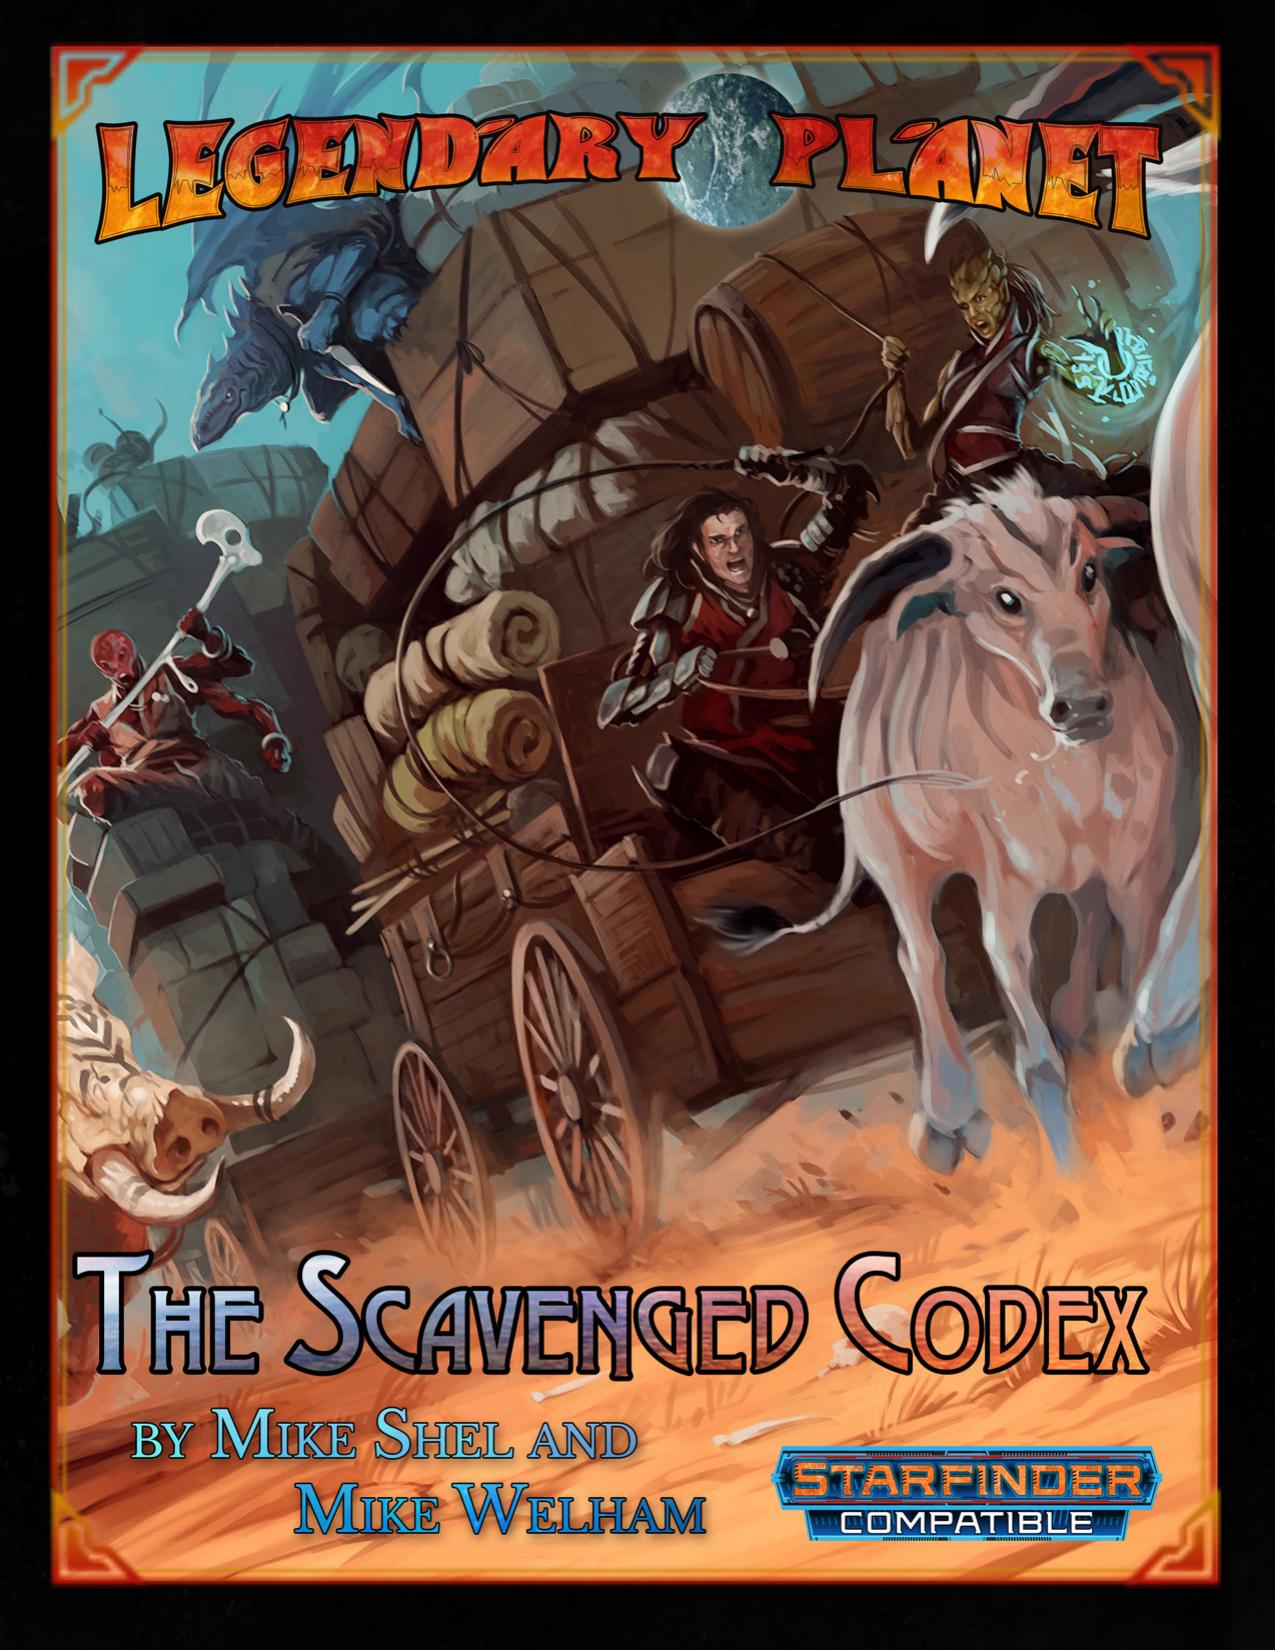 The Scavenged Codex